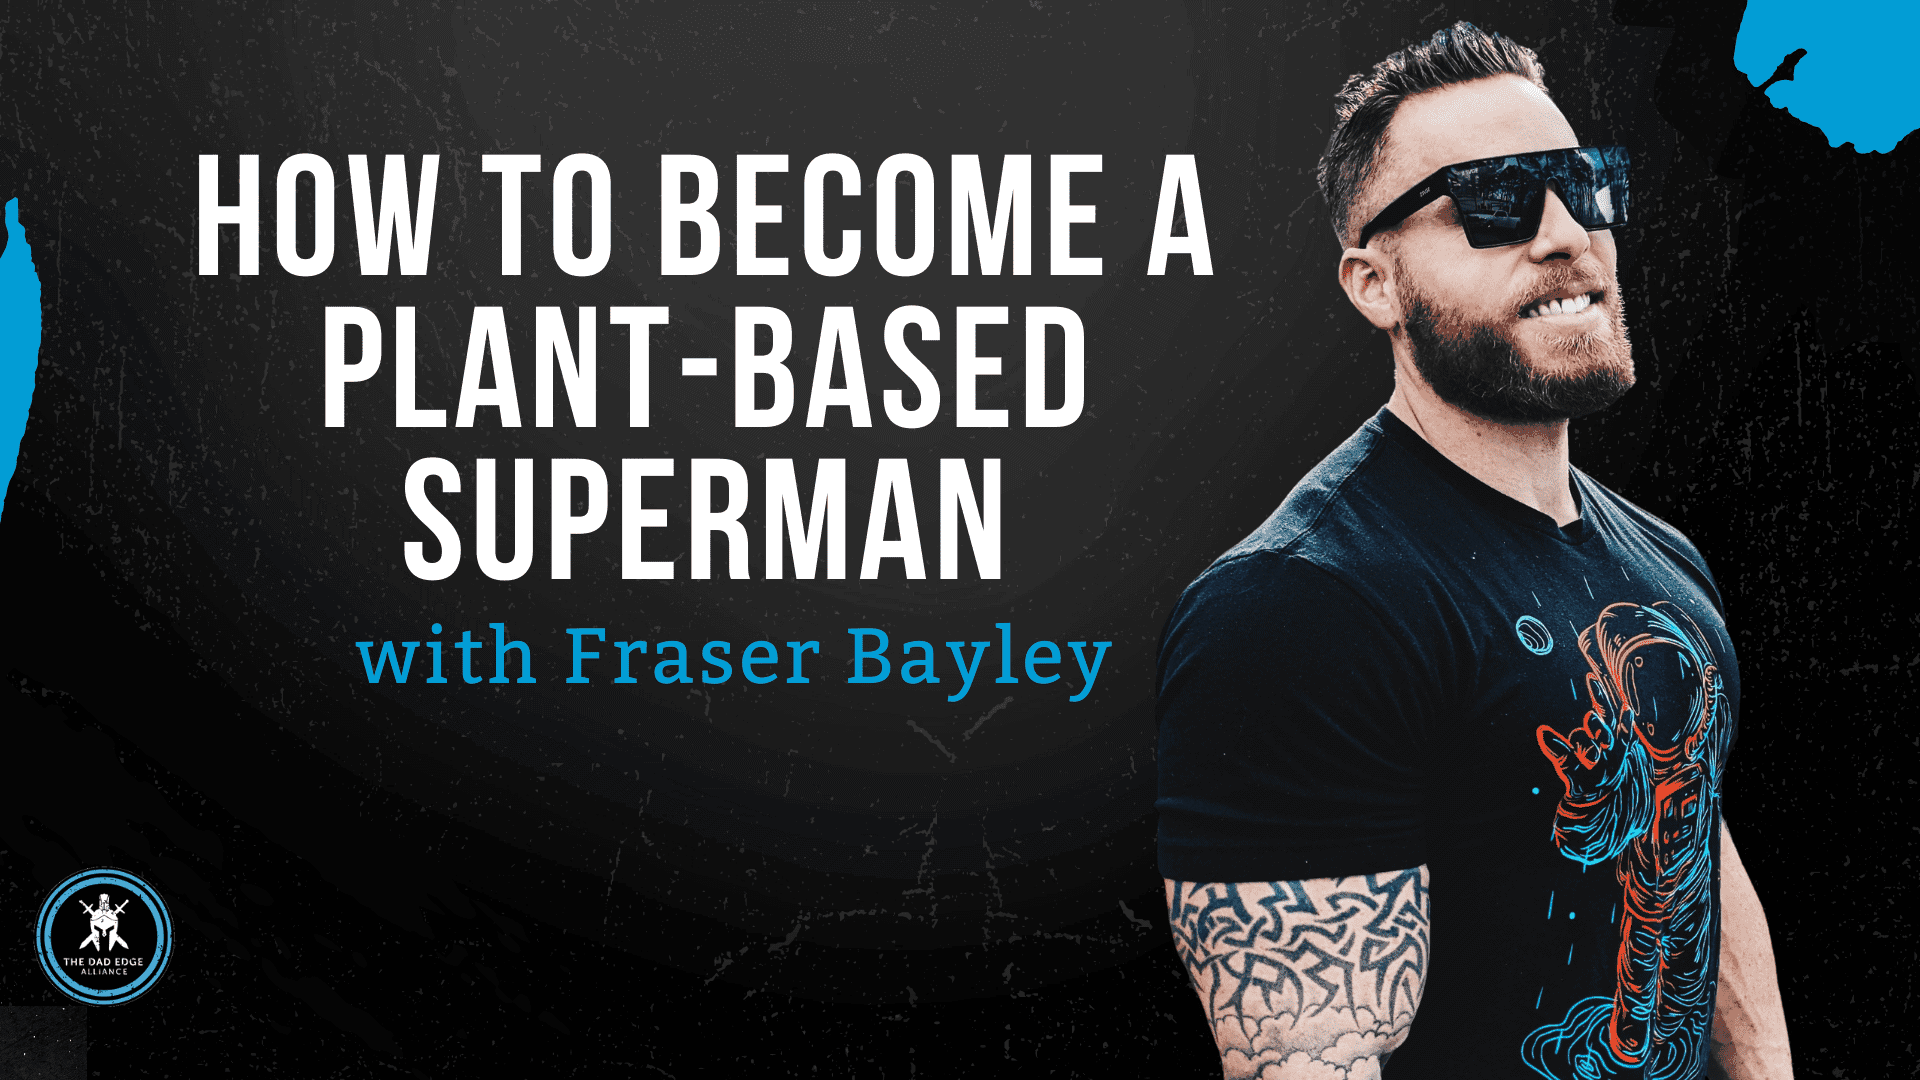 Fraser Bayley Plant-based nutritiotist